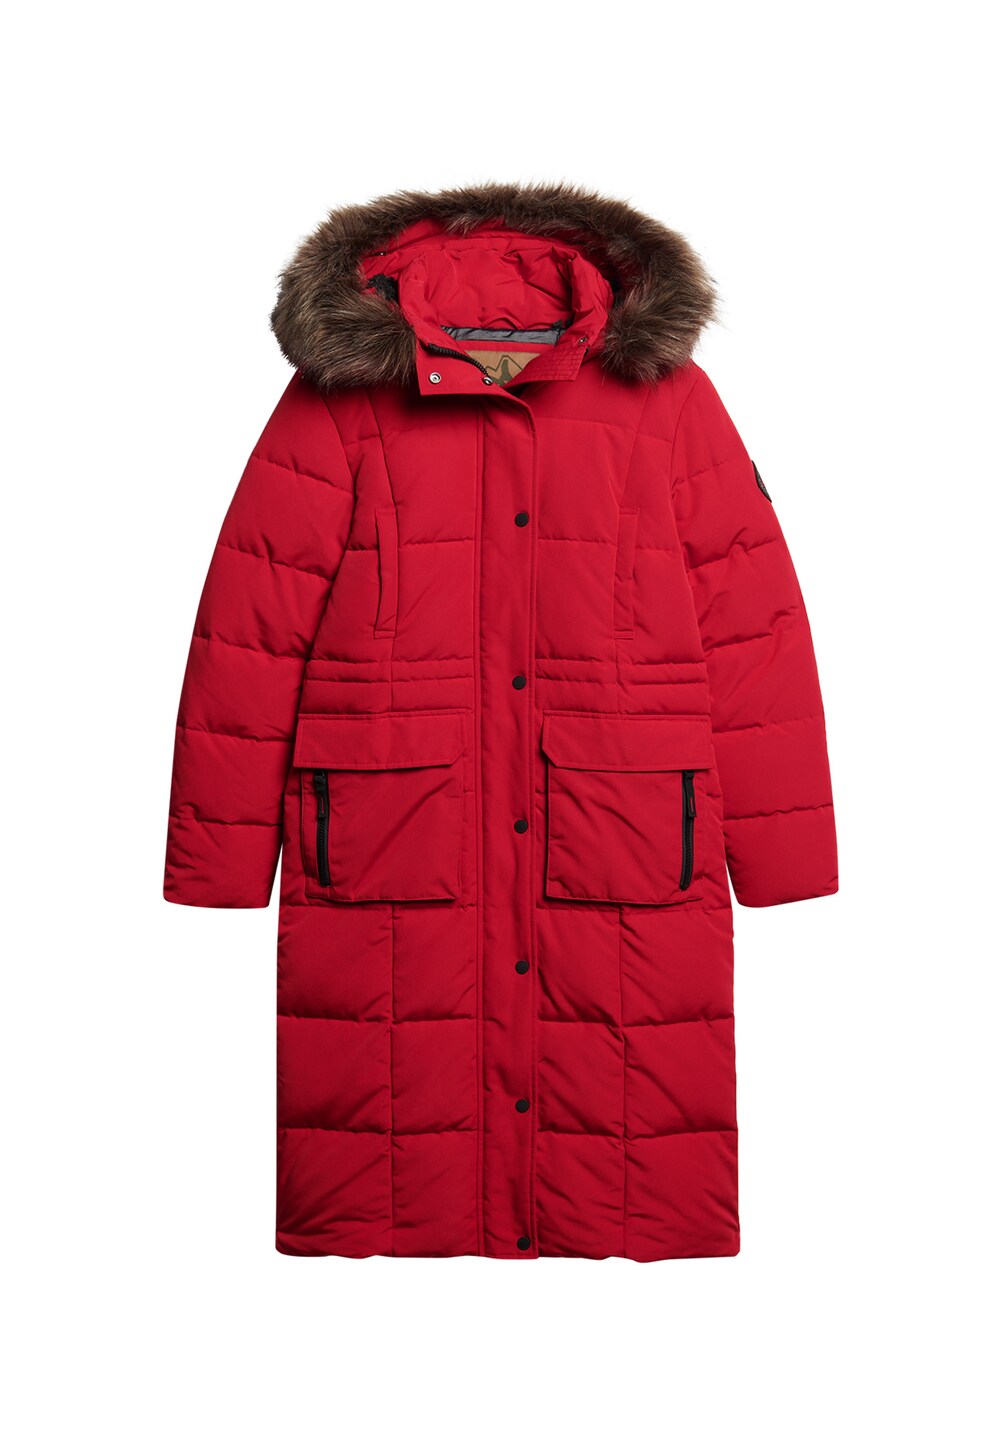 Зимнее пальто Superdry Everest, красный